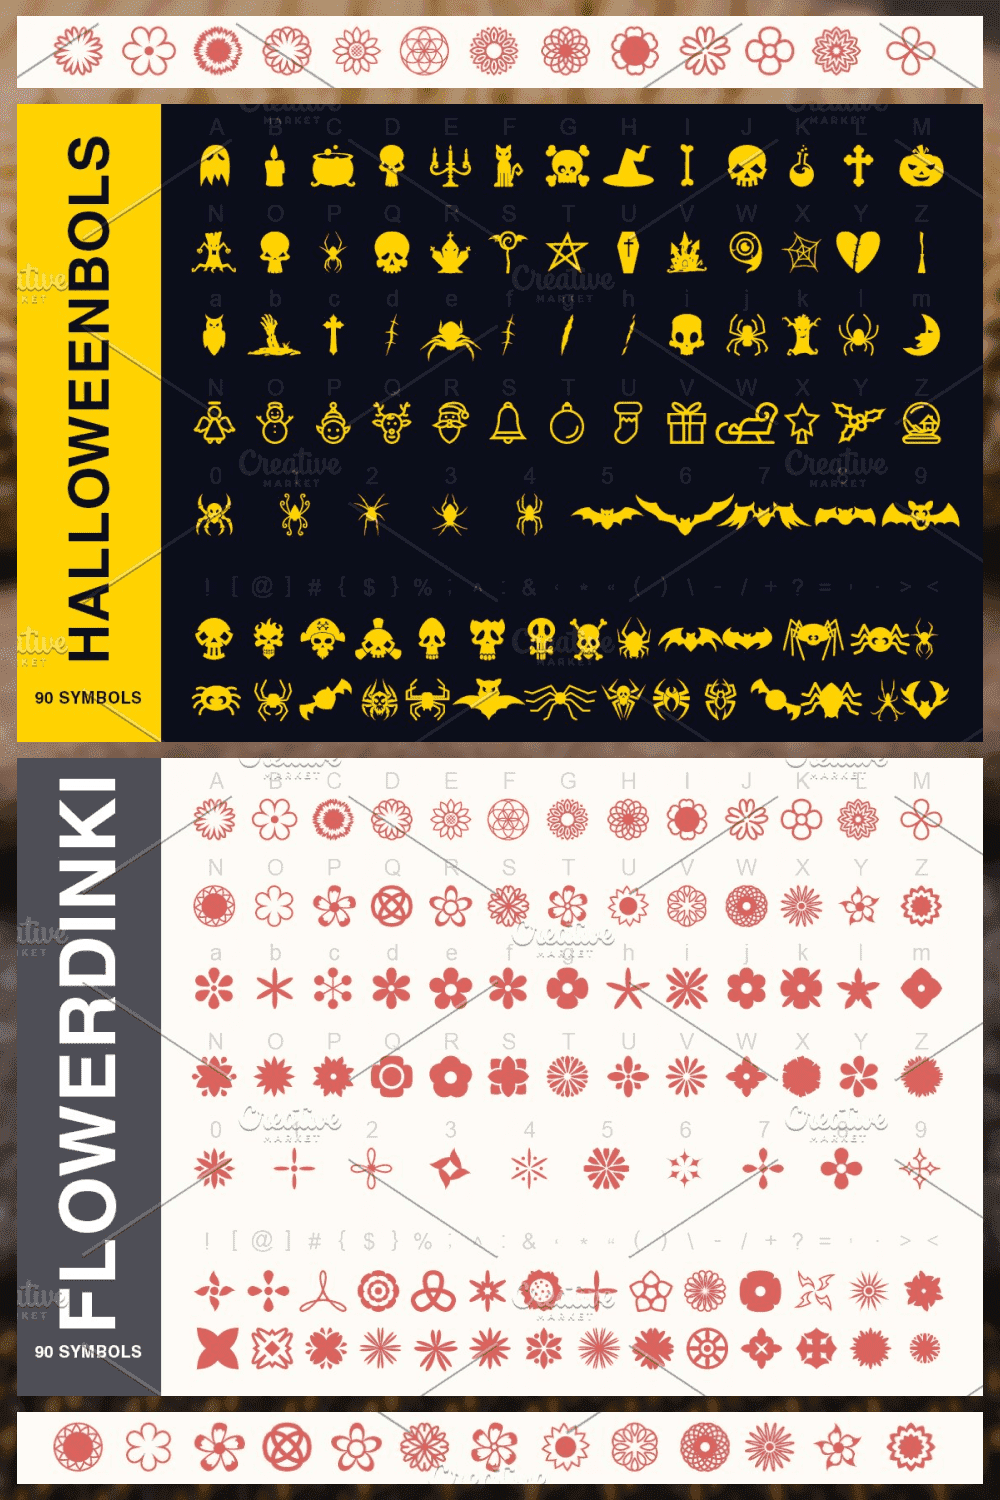 03 symbols font collection 450 shapes pinterest